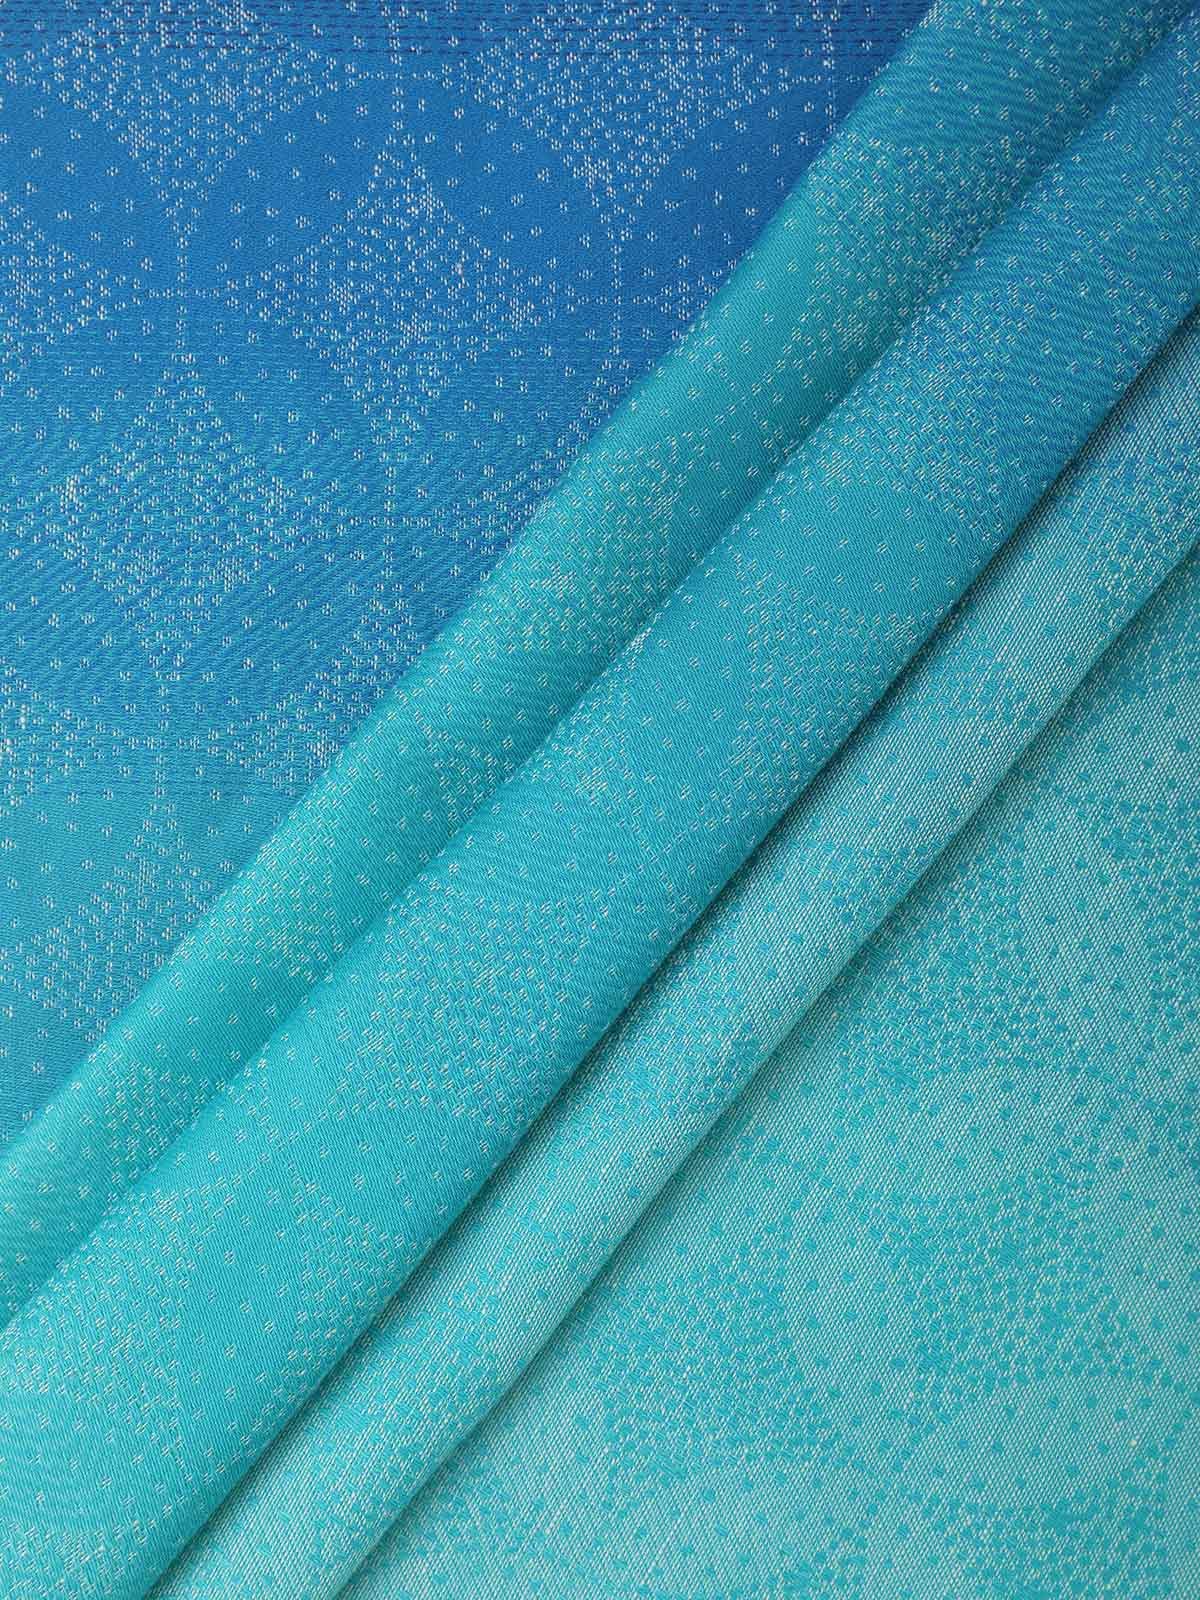 Starry Night Ocean Fabric Pieces